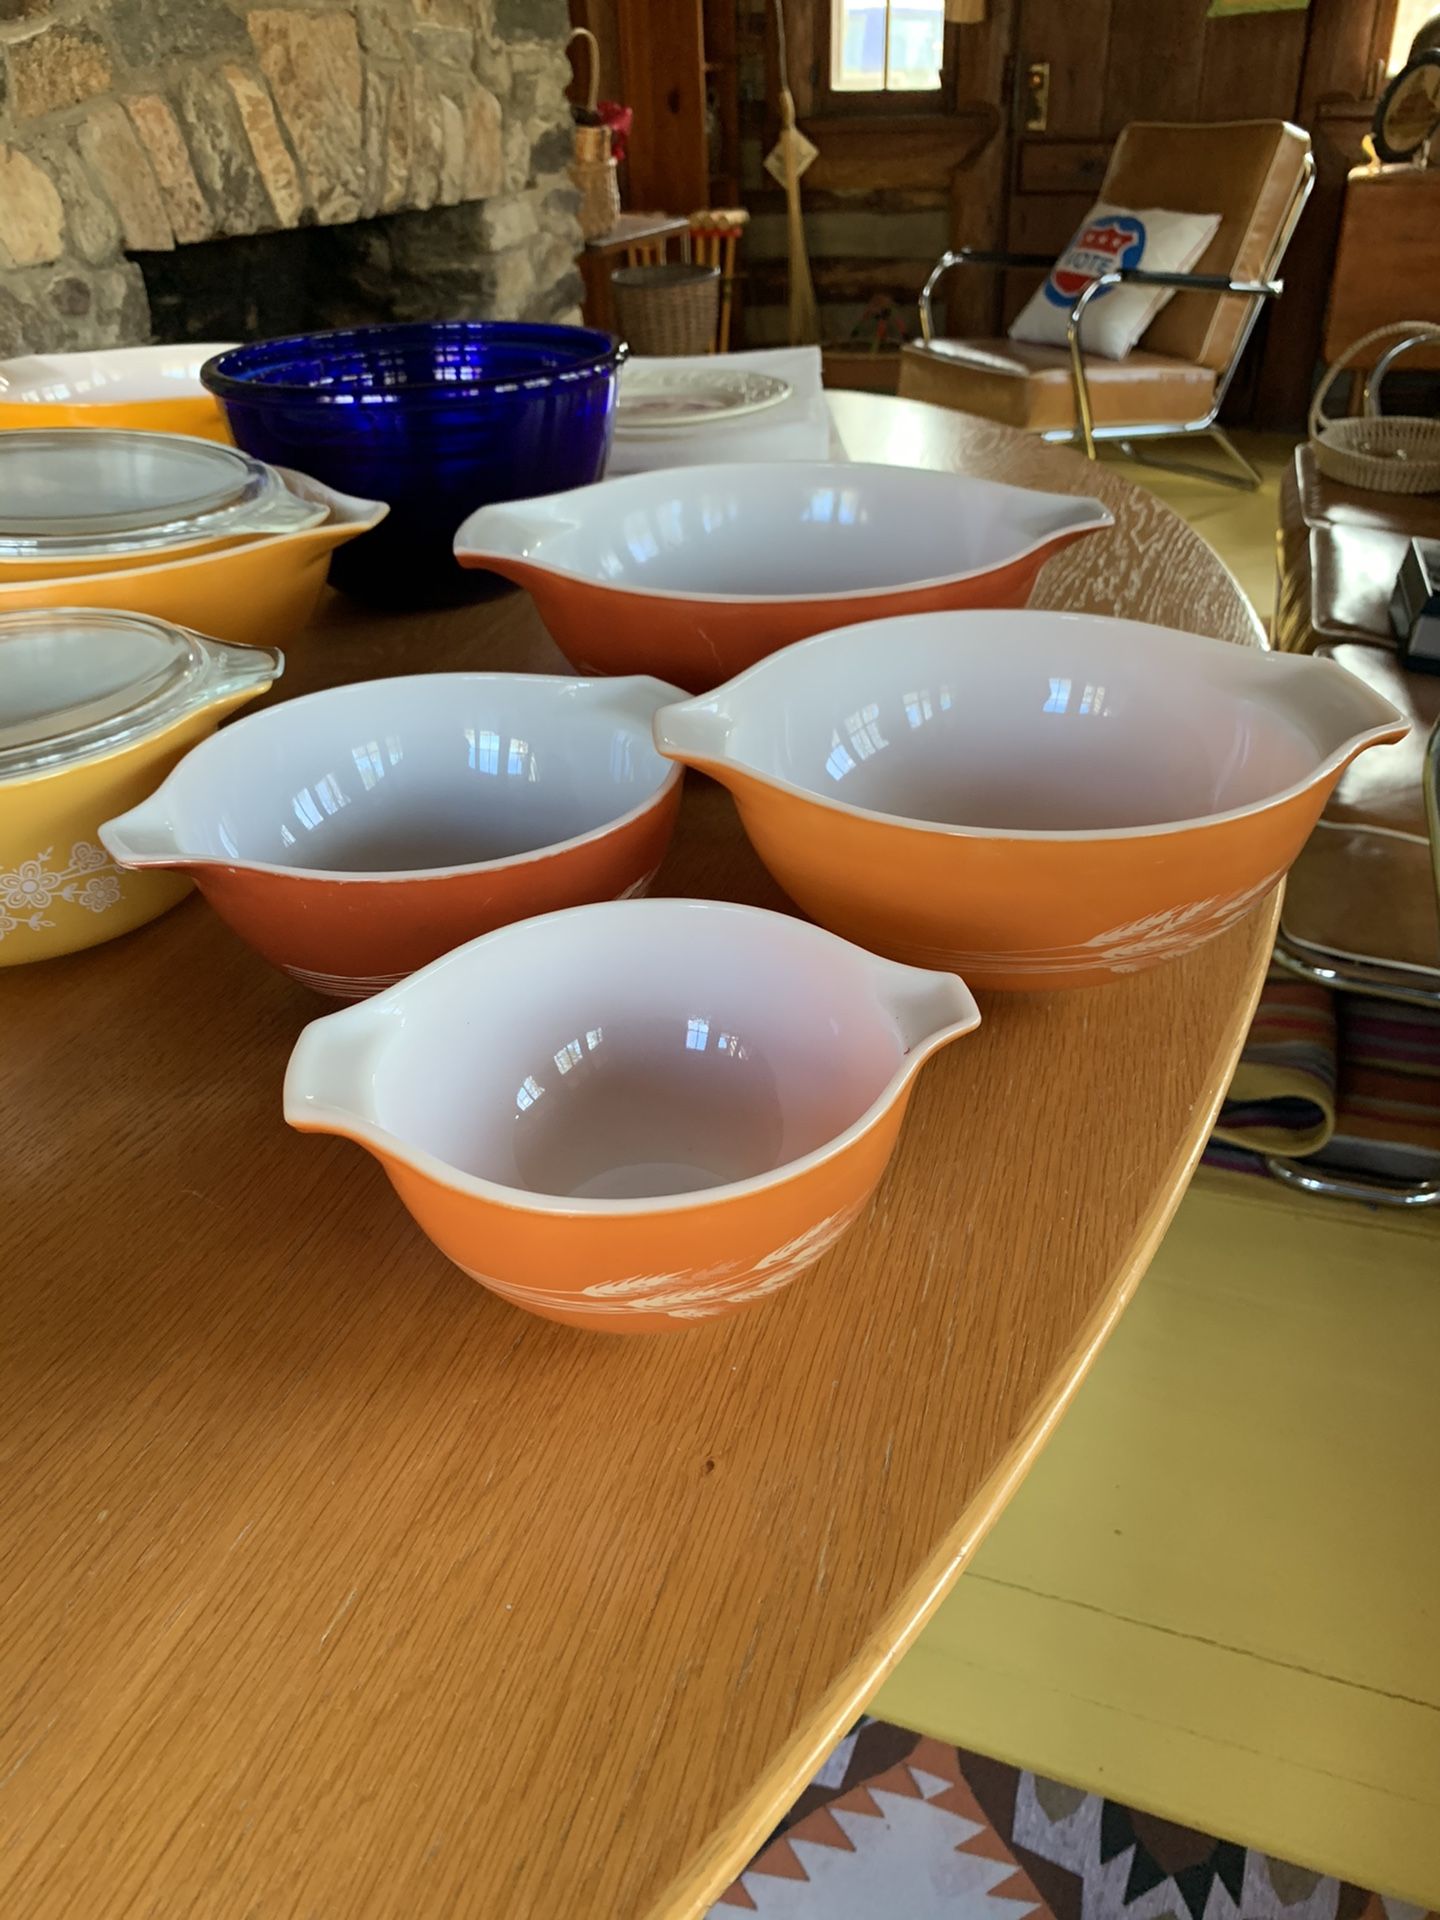 Pyrex bowls and casserole